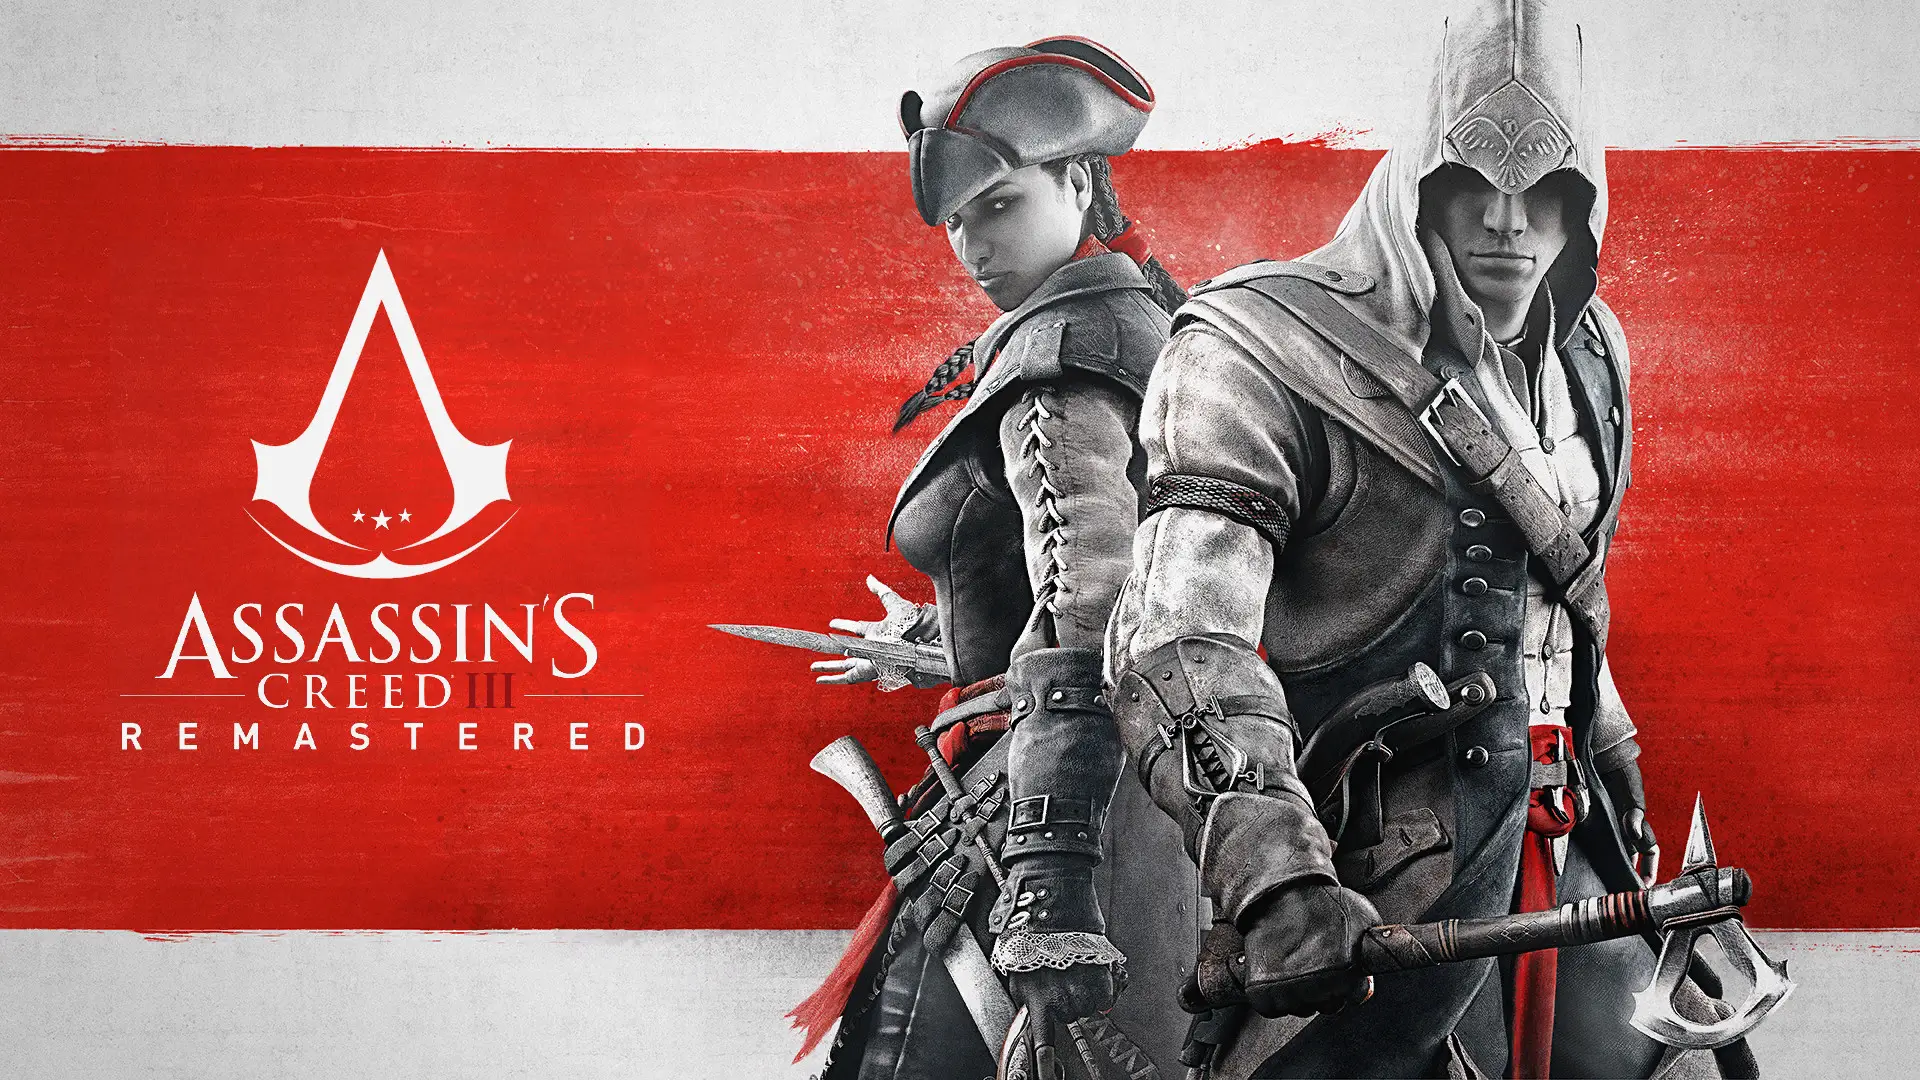 Assassins-Creed-III-Remastered-image-1.jpg